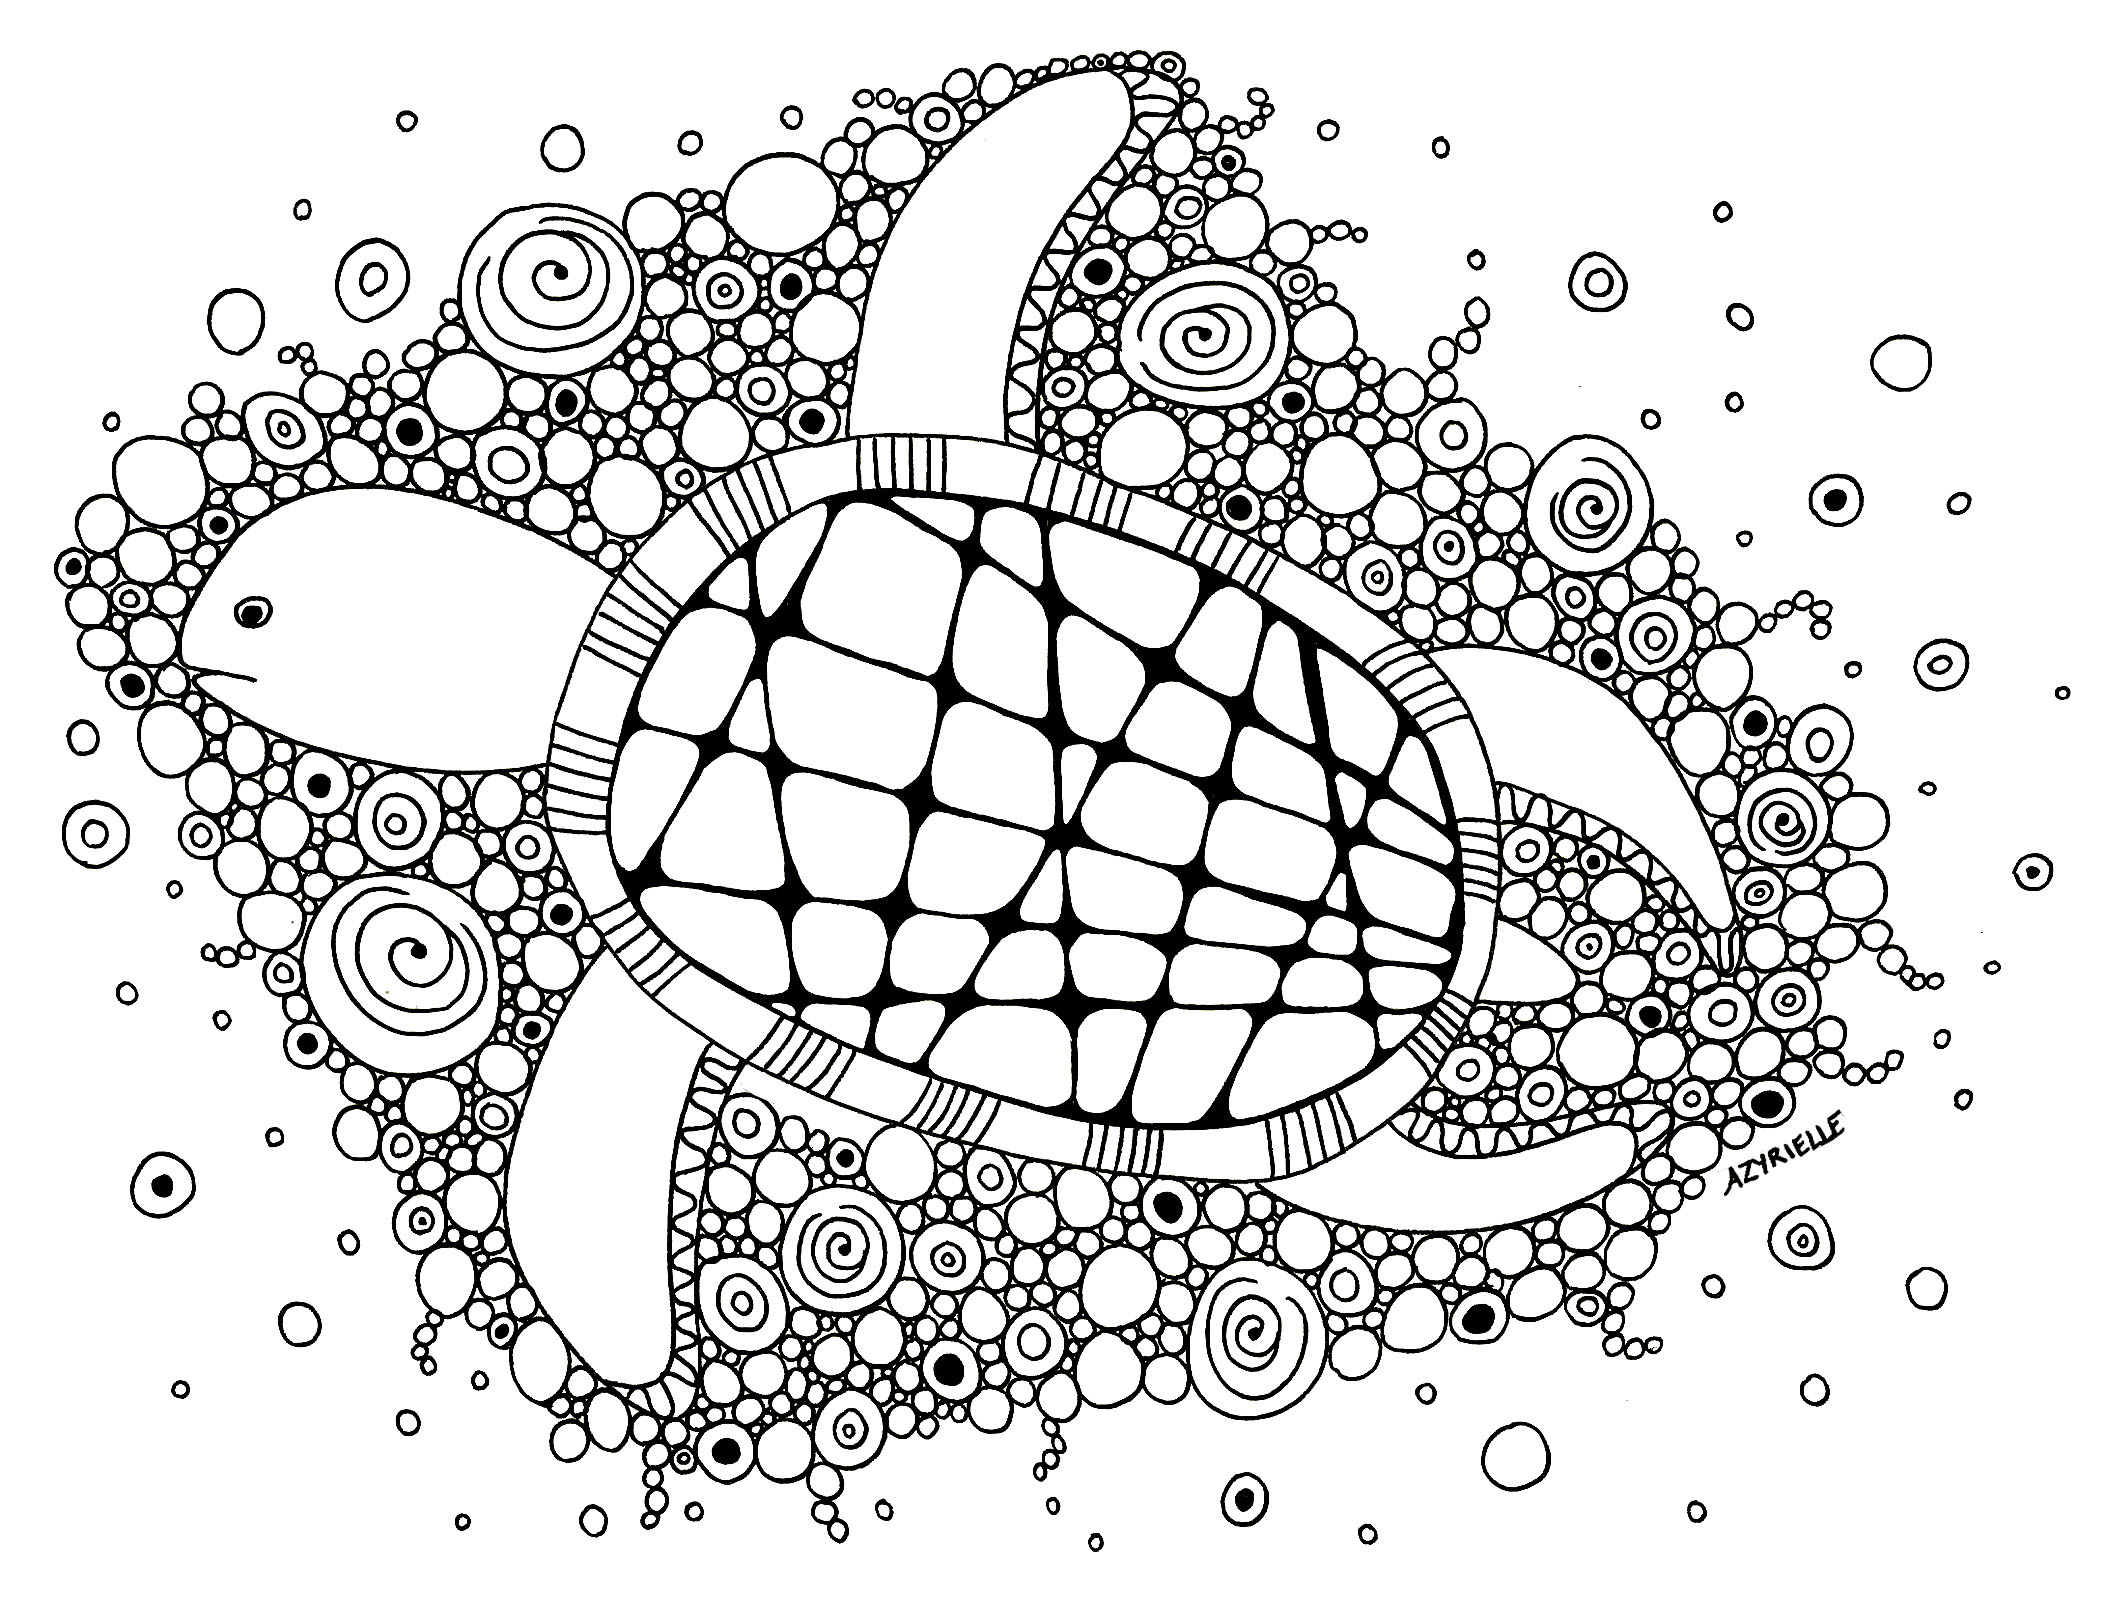 Download Turtles to print - Turtles Kids Coloring Pages